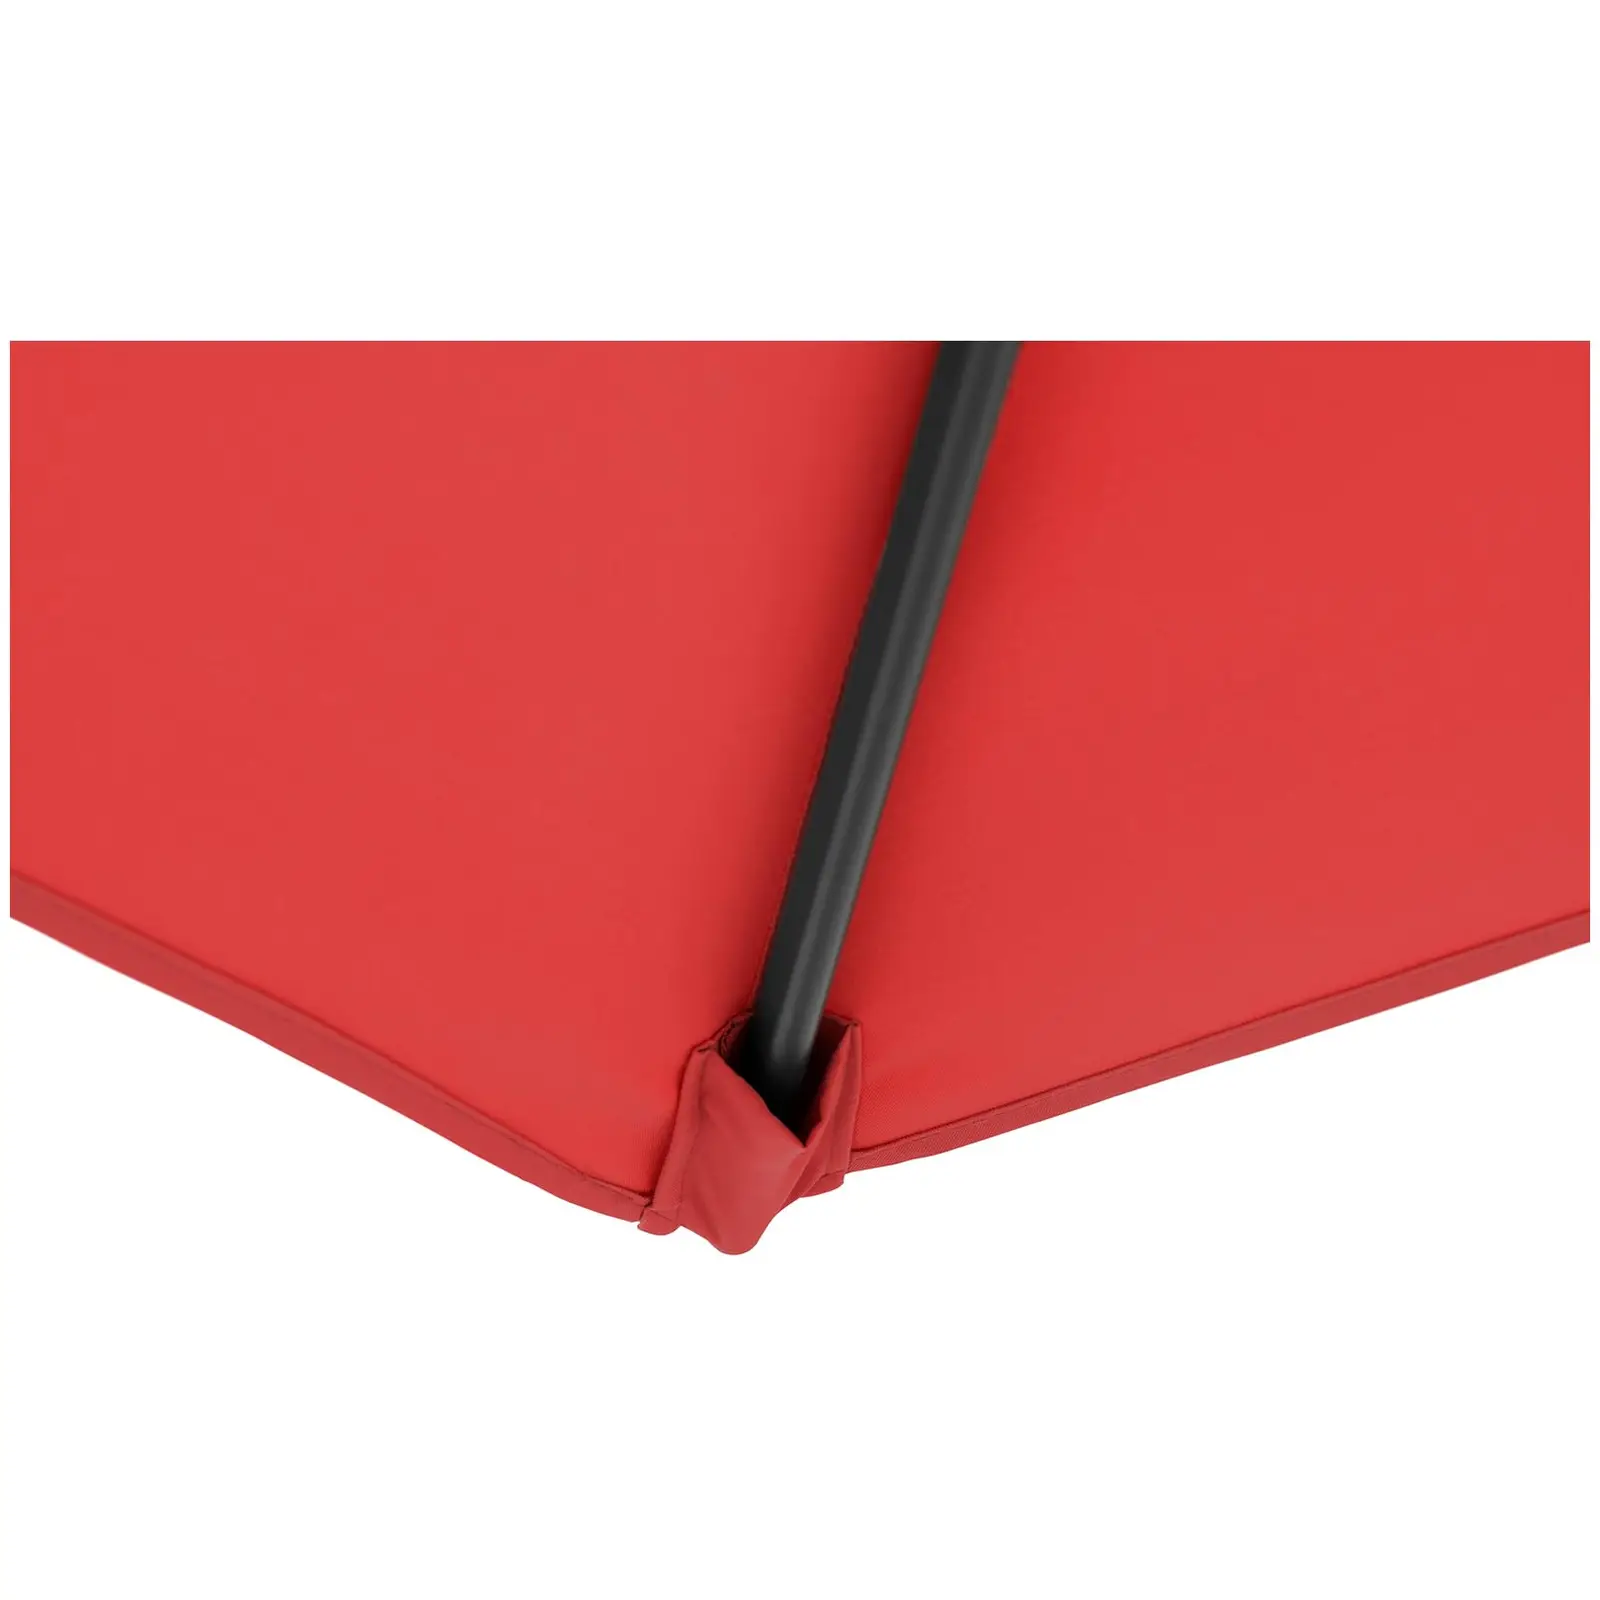 Sombrilla grande - roja - hexagonal - Ø 300 cm - inclinable